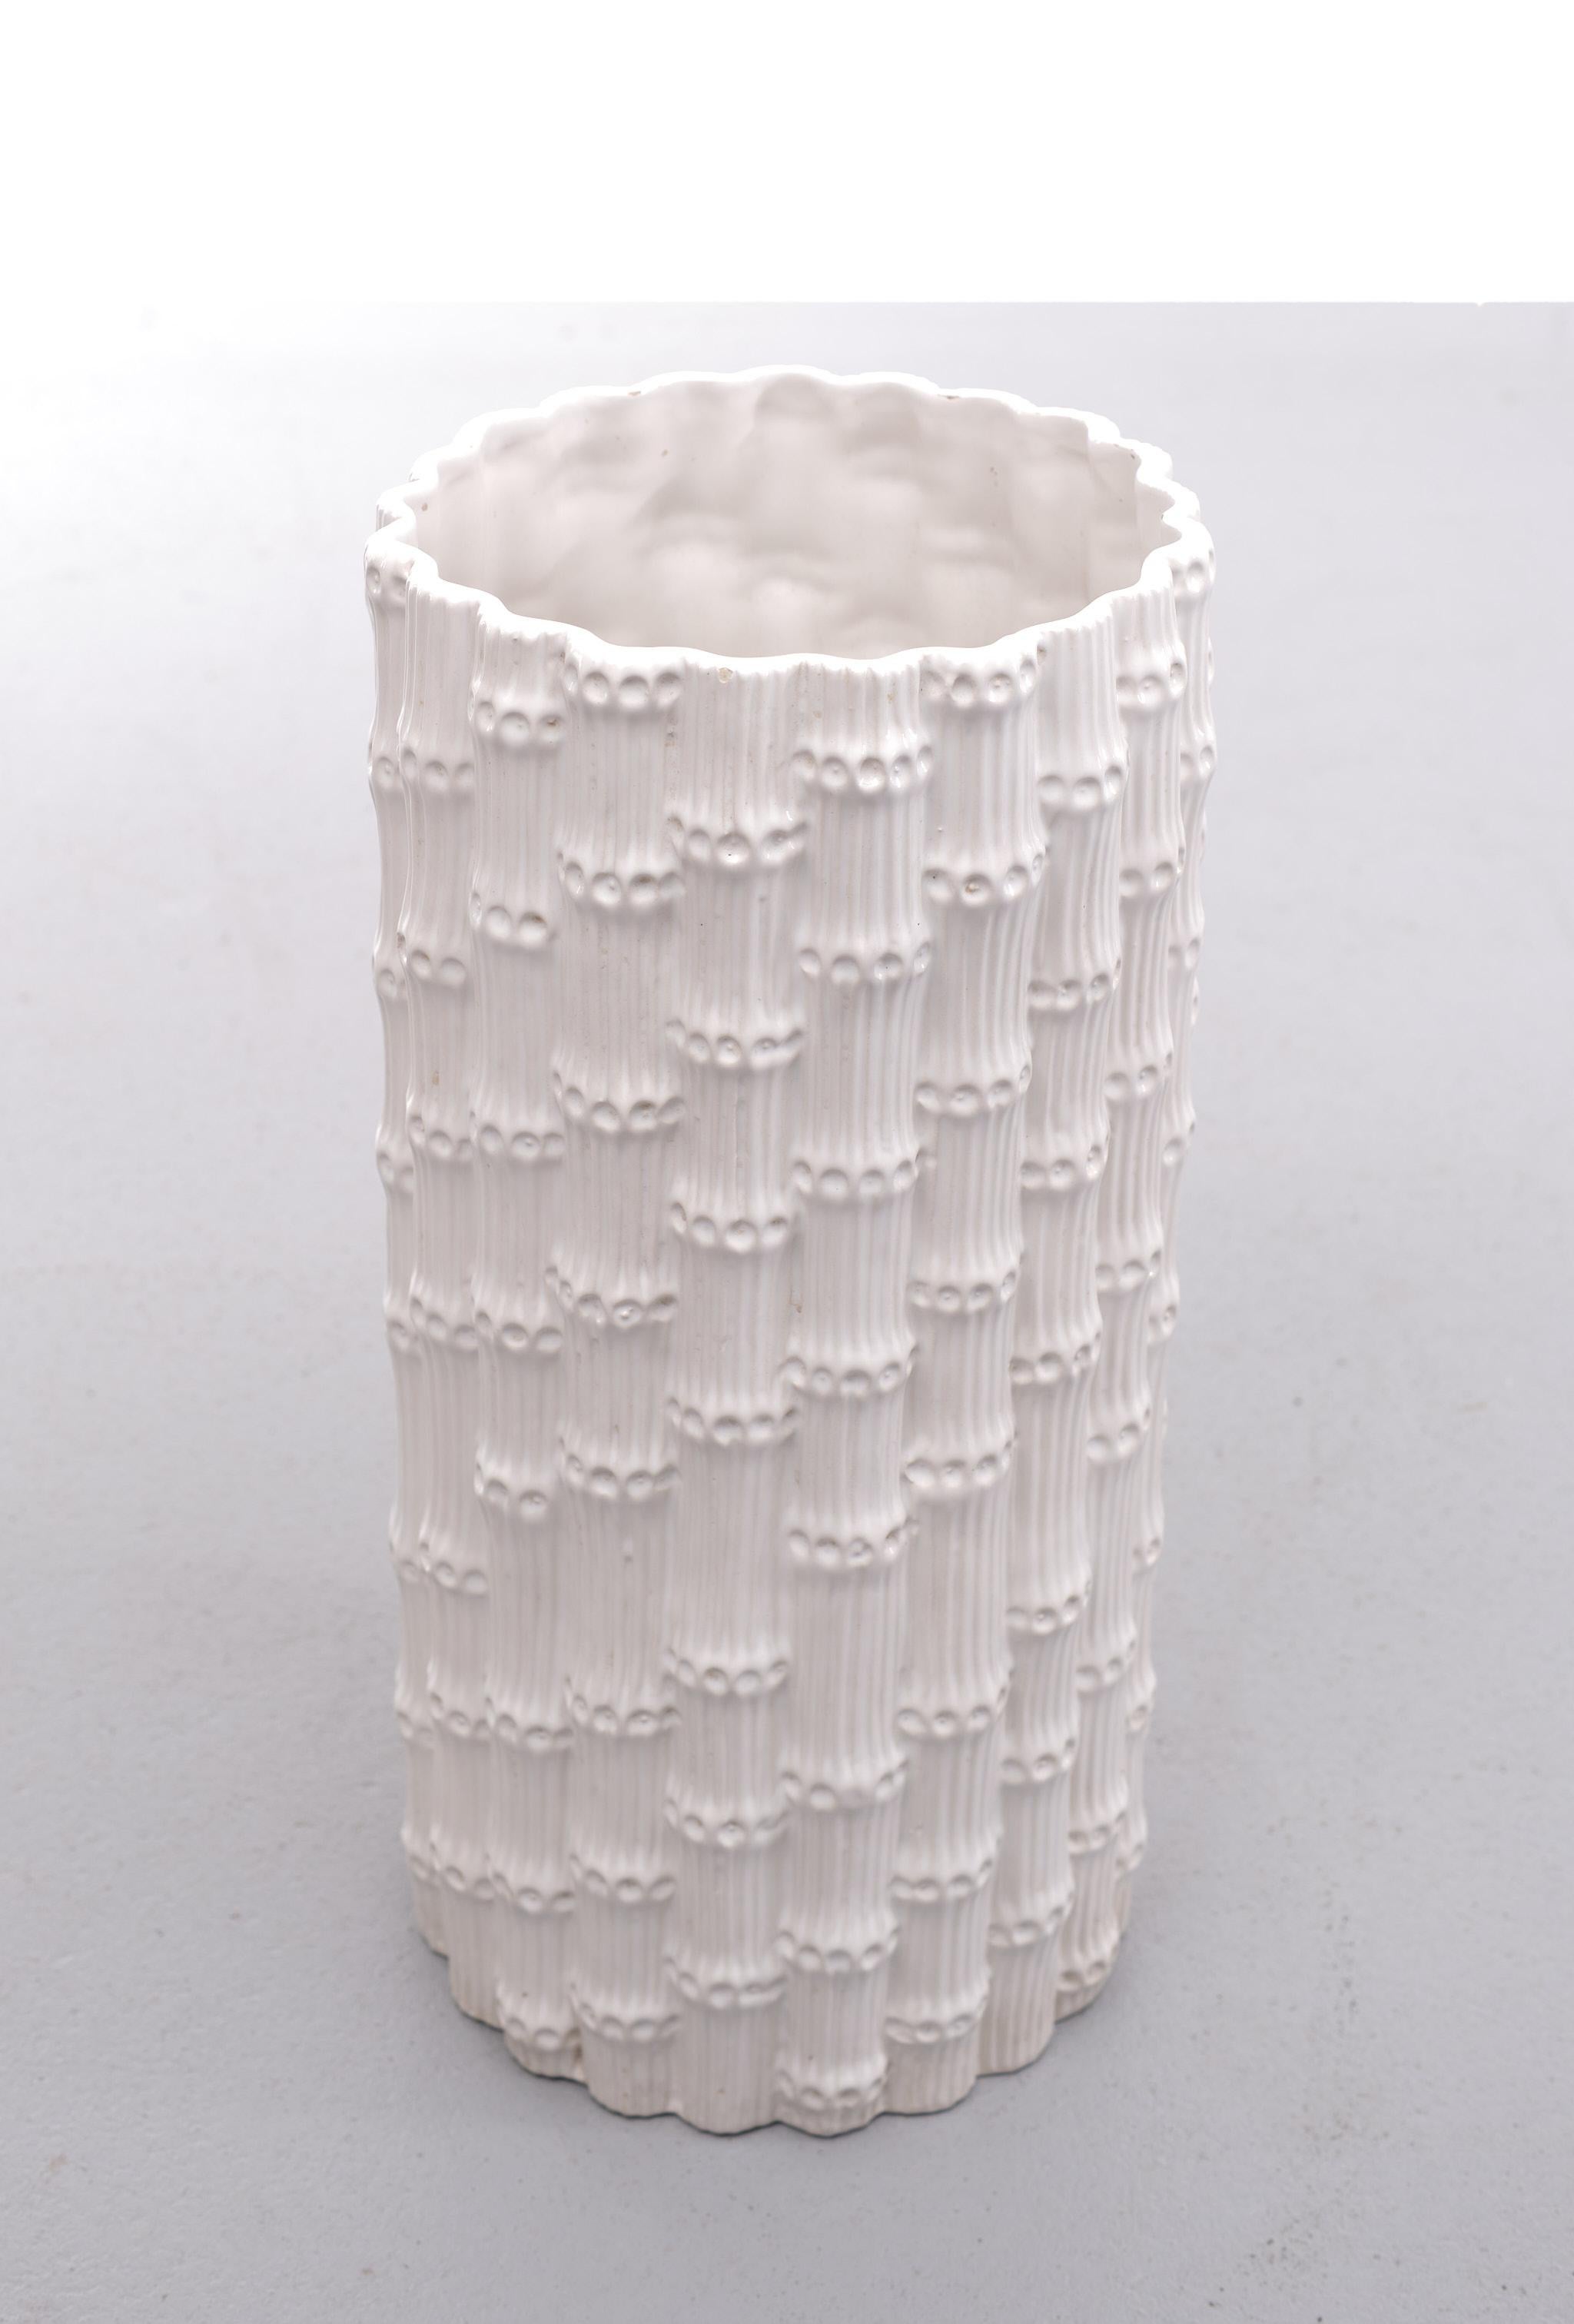 Large Faux bamboo ceramic vase Italian 1970s Beautiful stylish piece.
Some minor ware. White color.